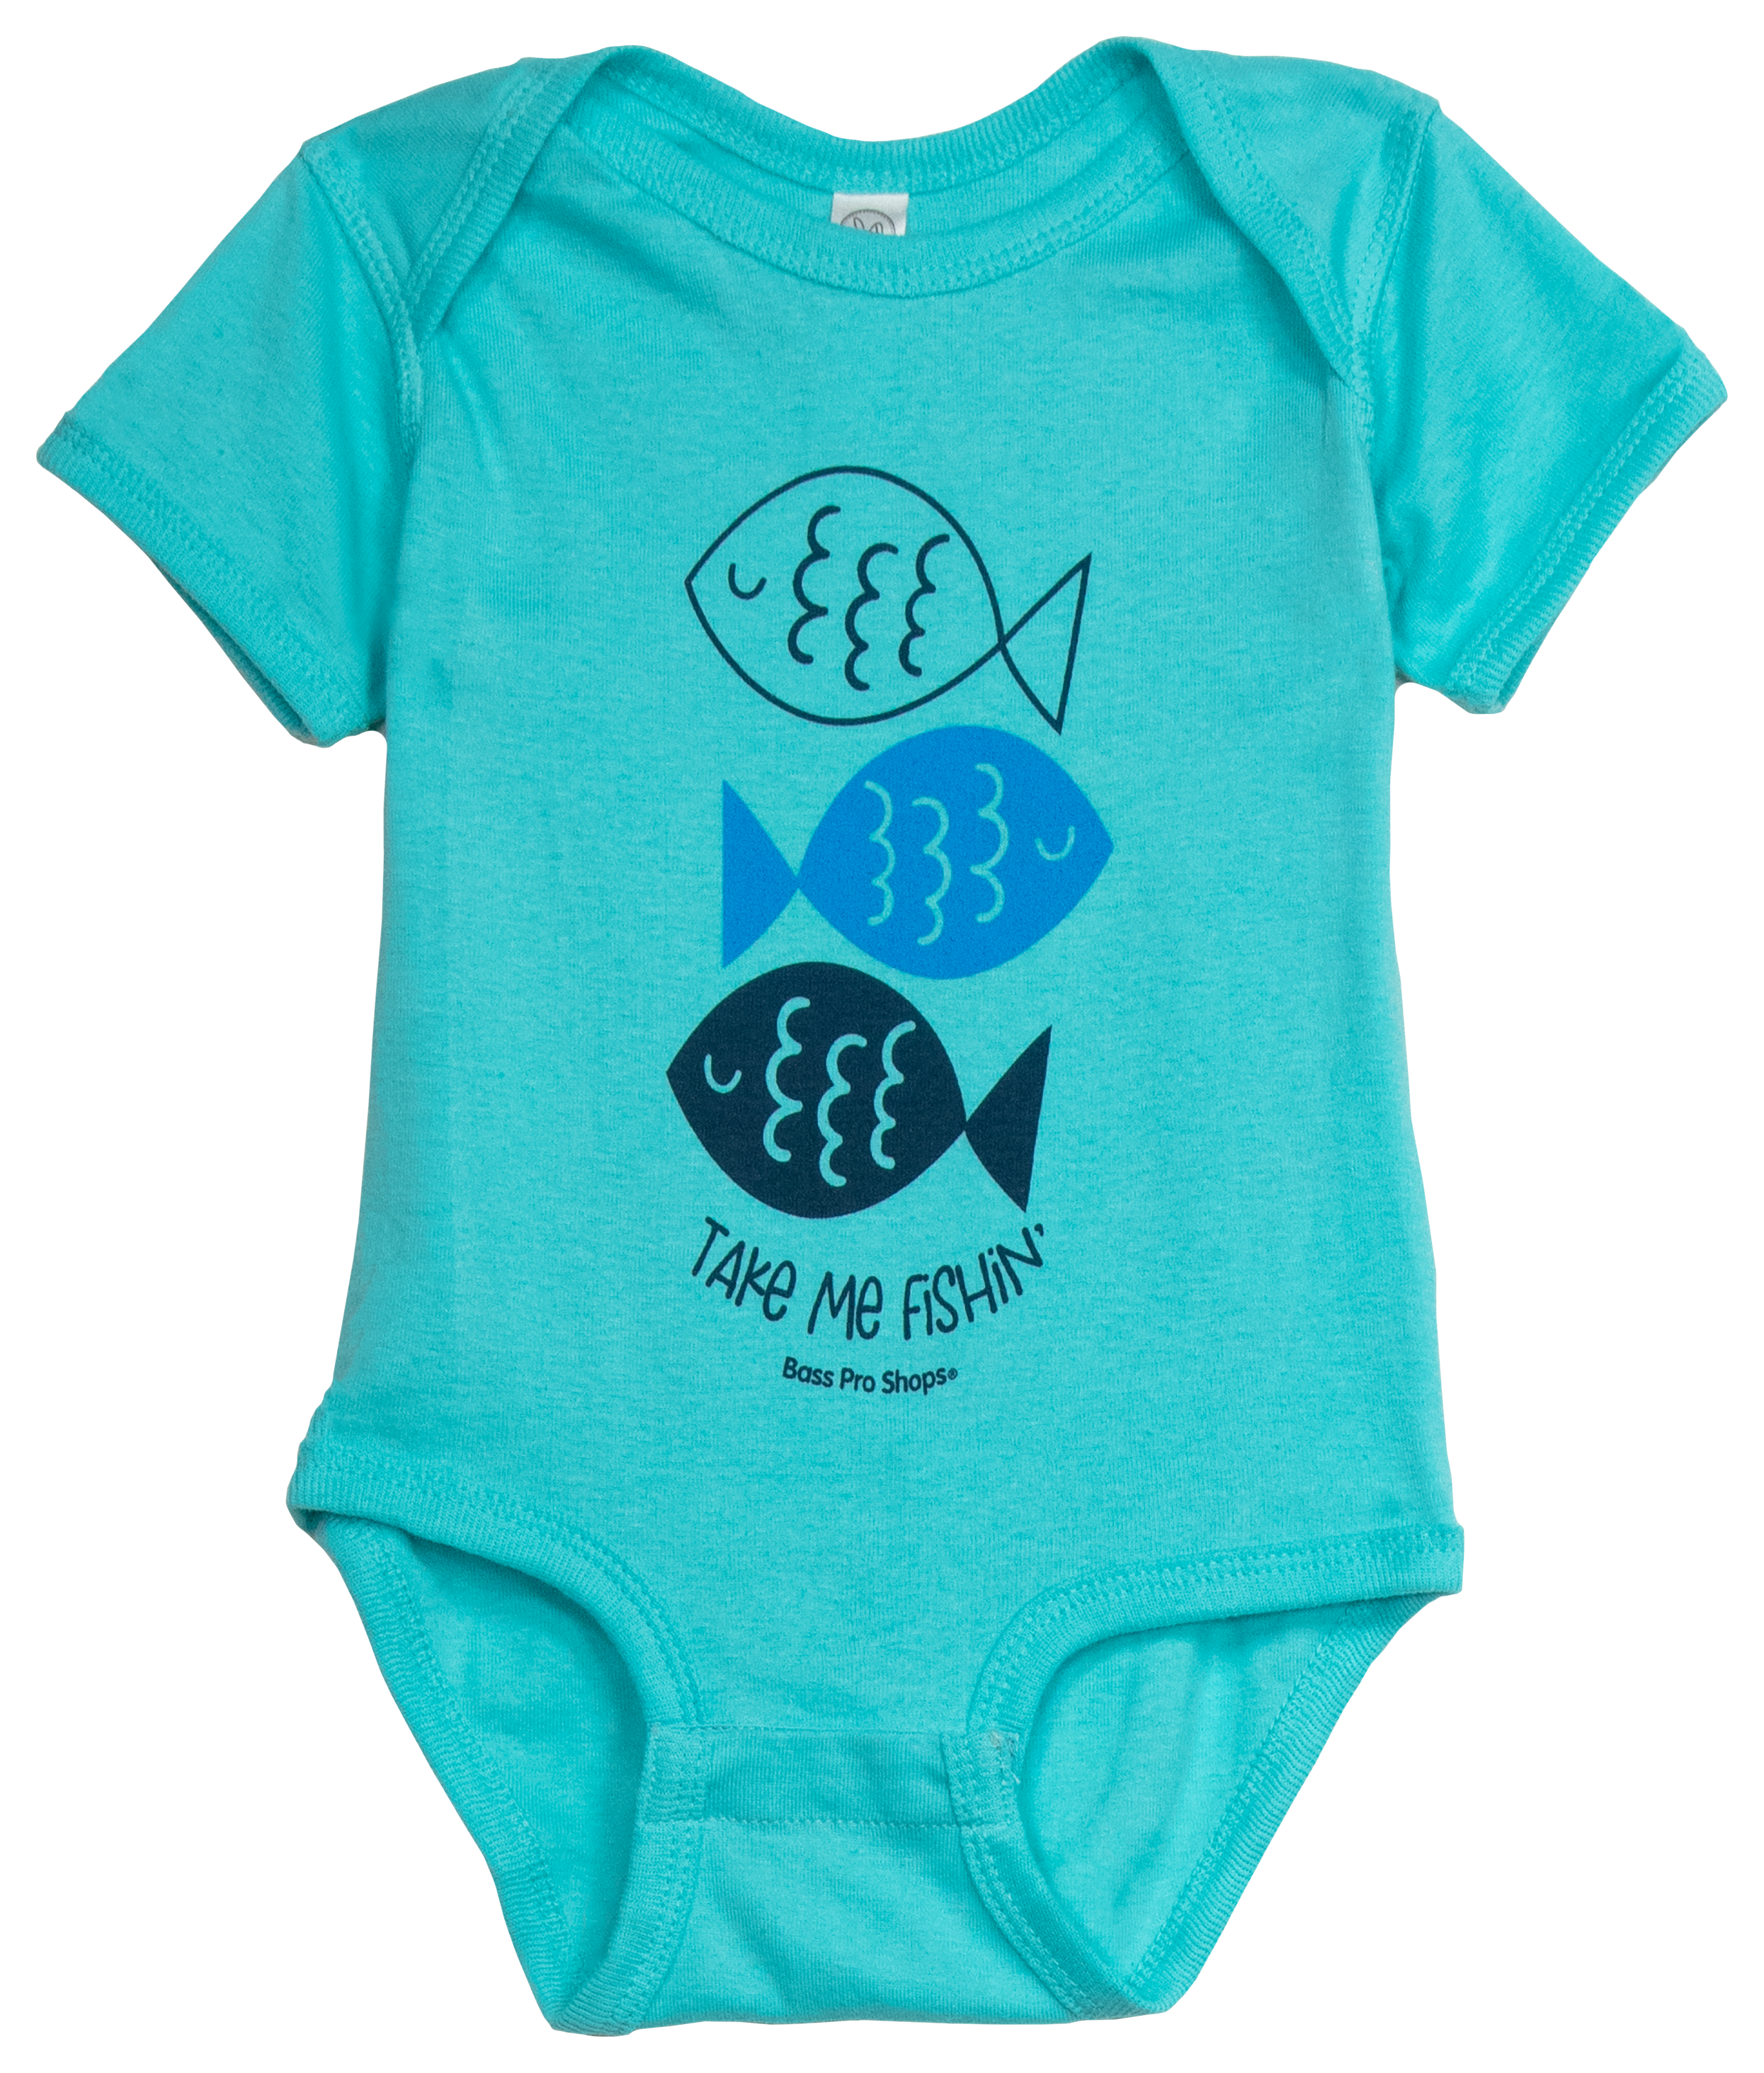 Lake Lanier Store: Bass Pro Shops My First Fishing Shirt for Baby